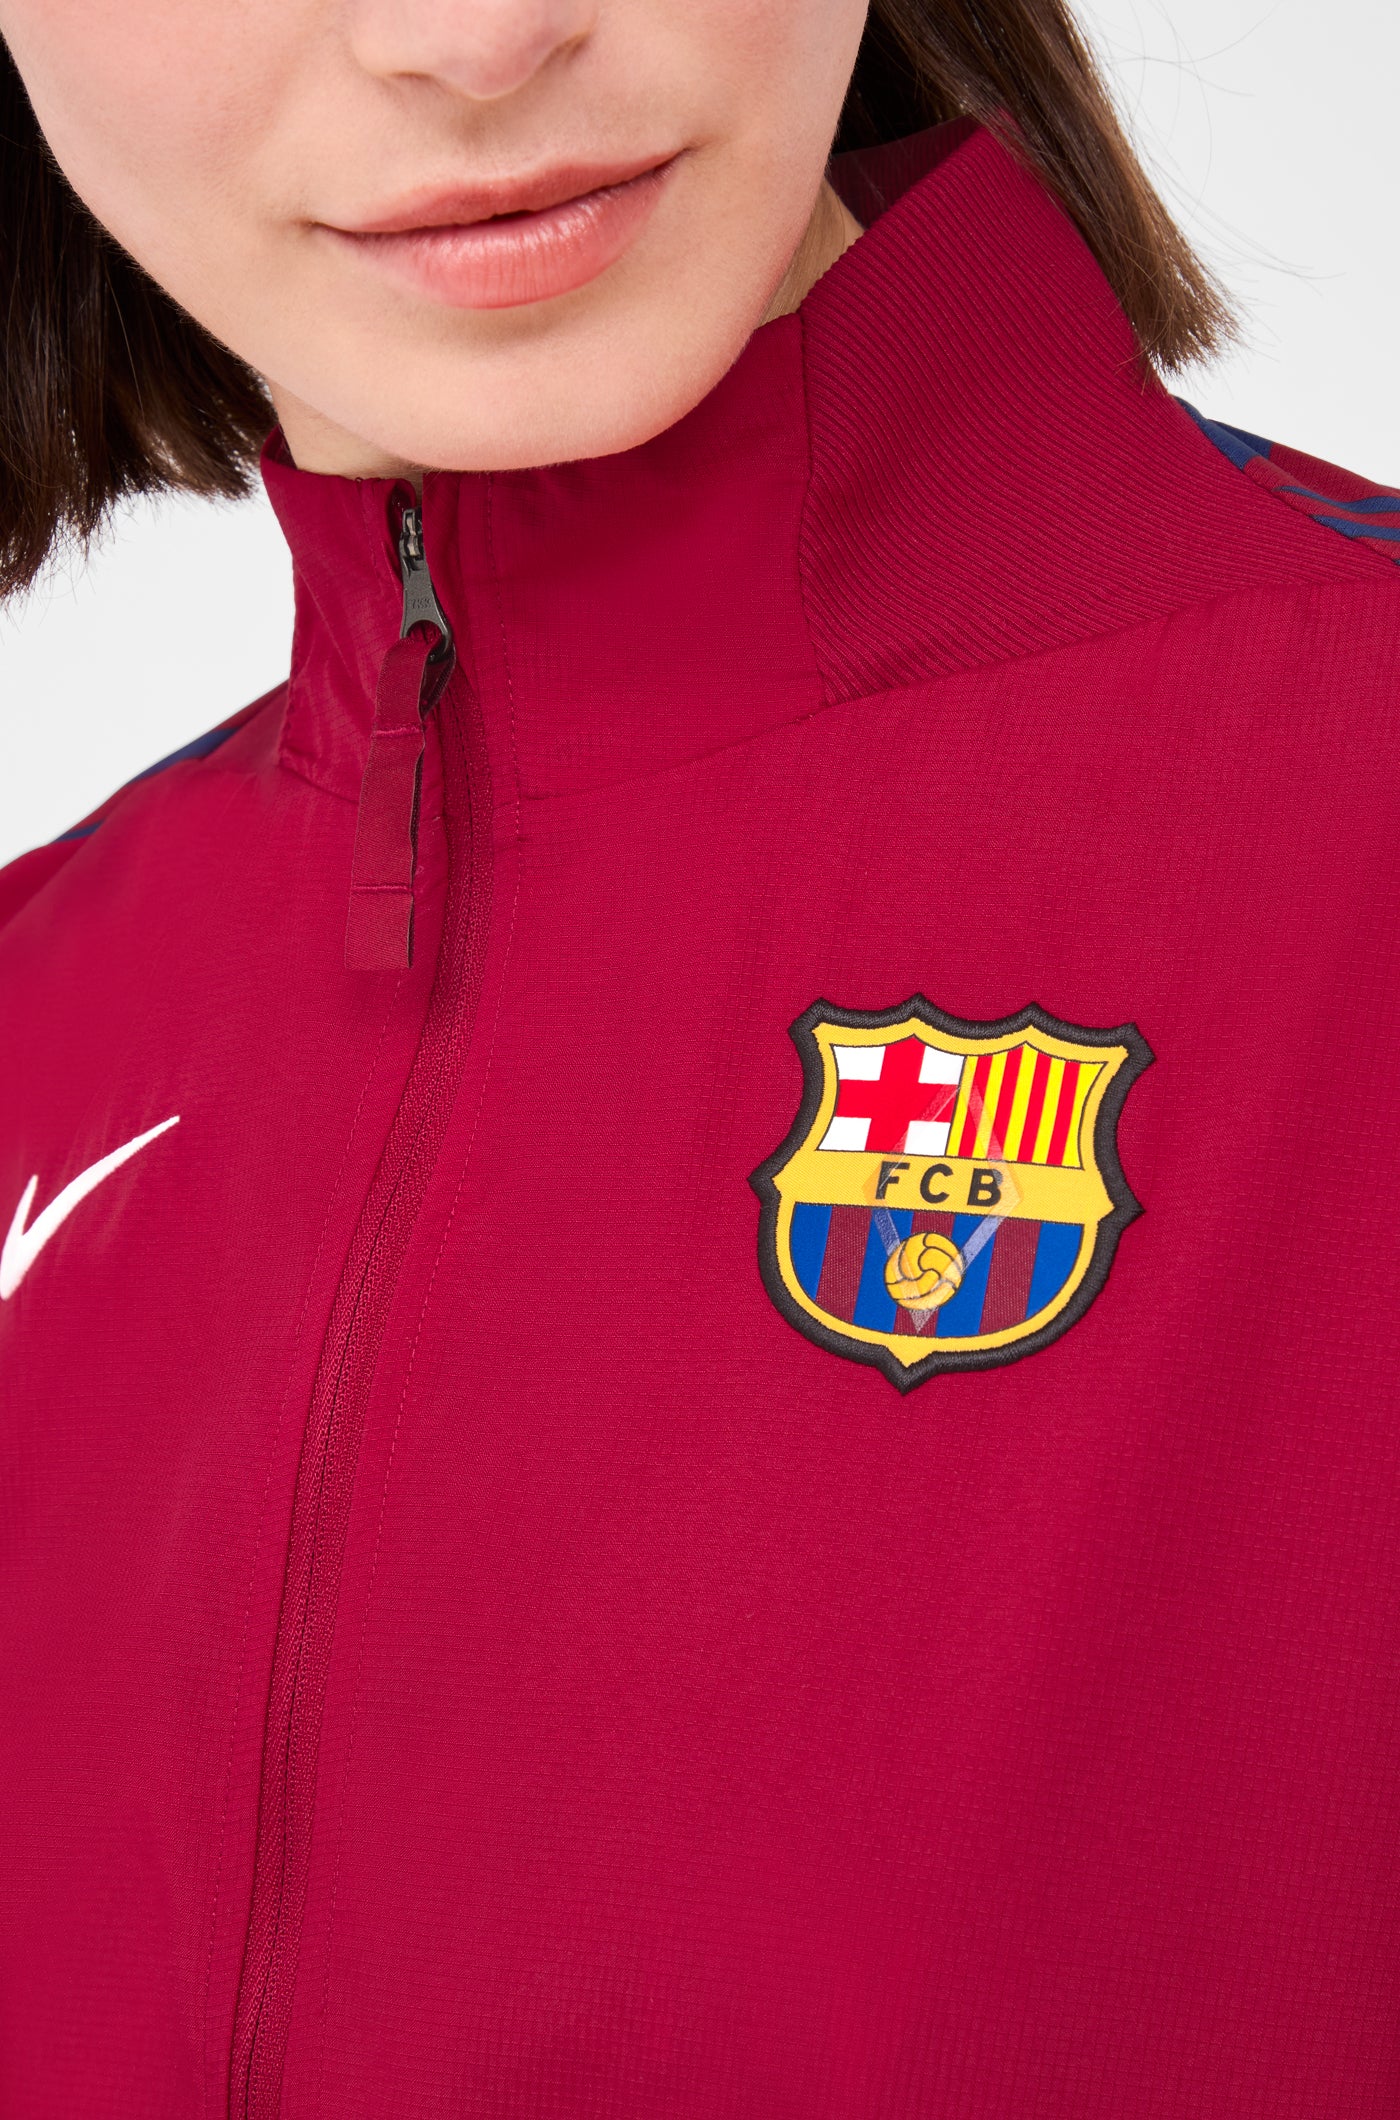 NIKE FC BARCELONA Football Mens Track Jacket Full Zip Top Size M £17.99 -  PicClick UK